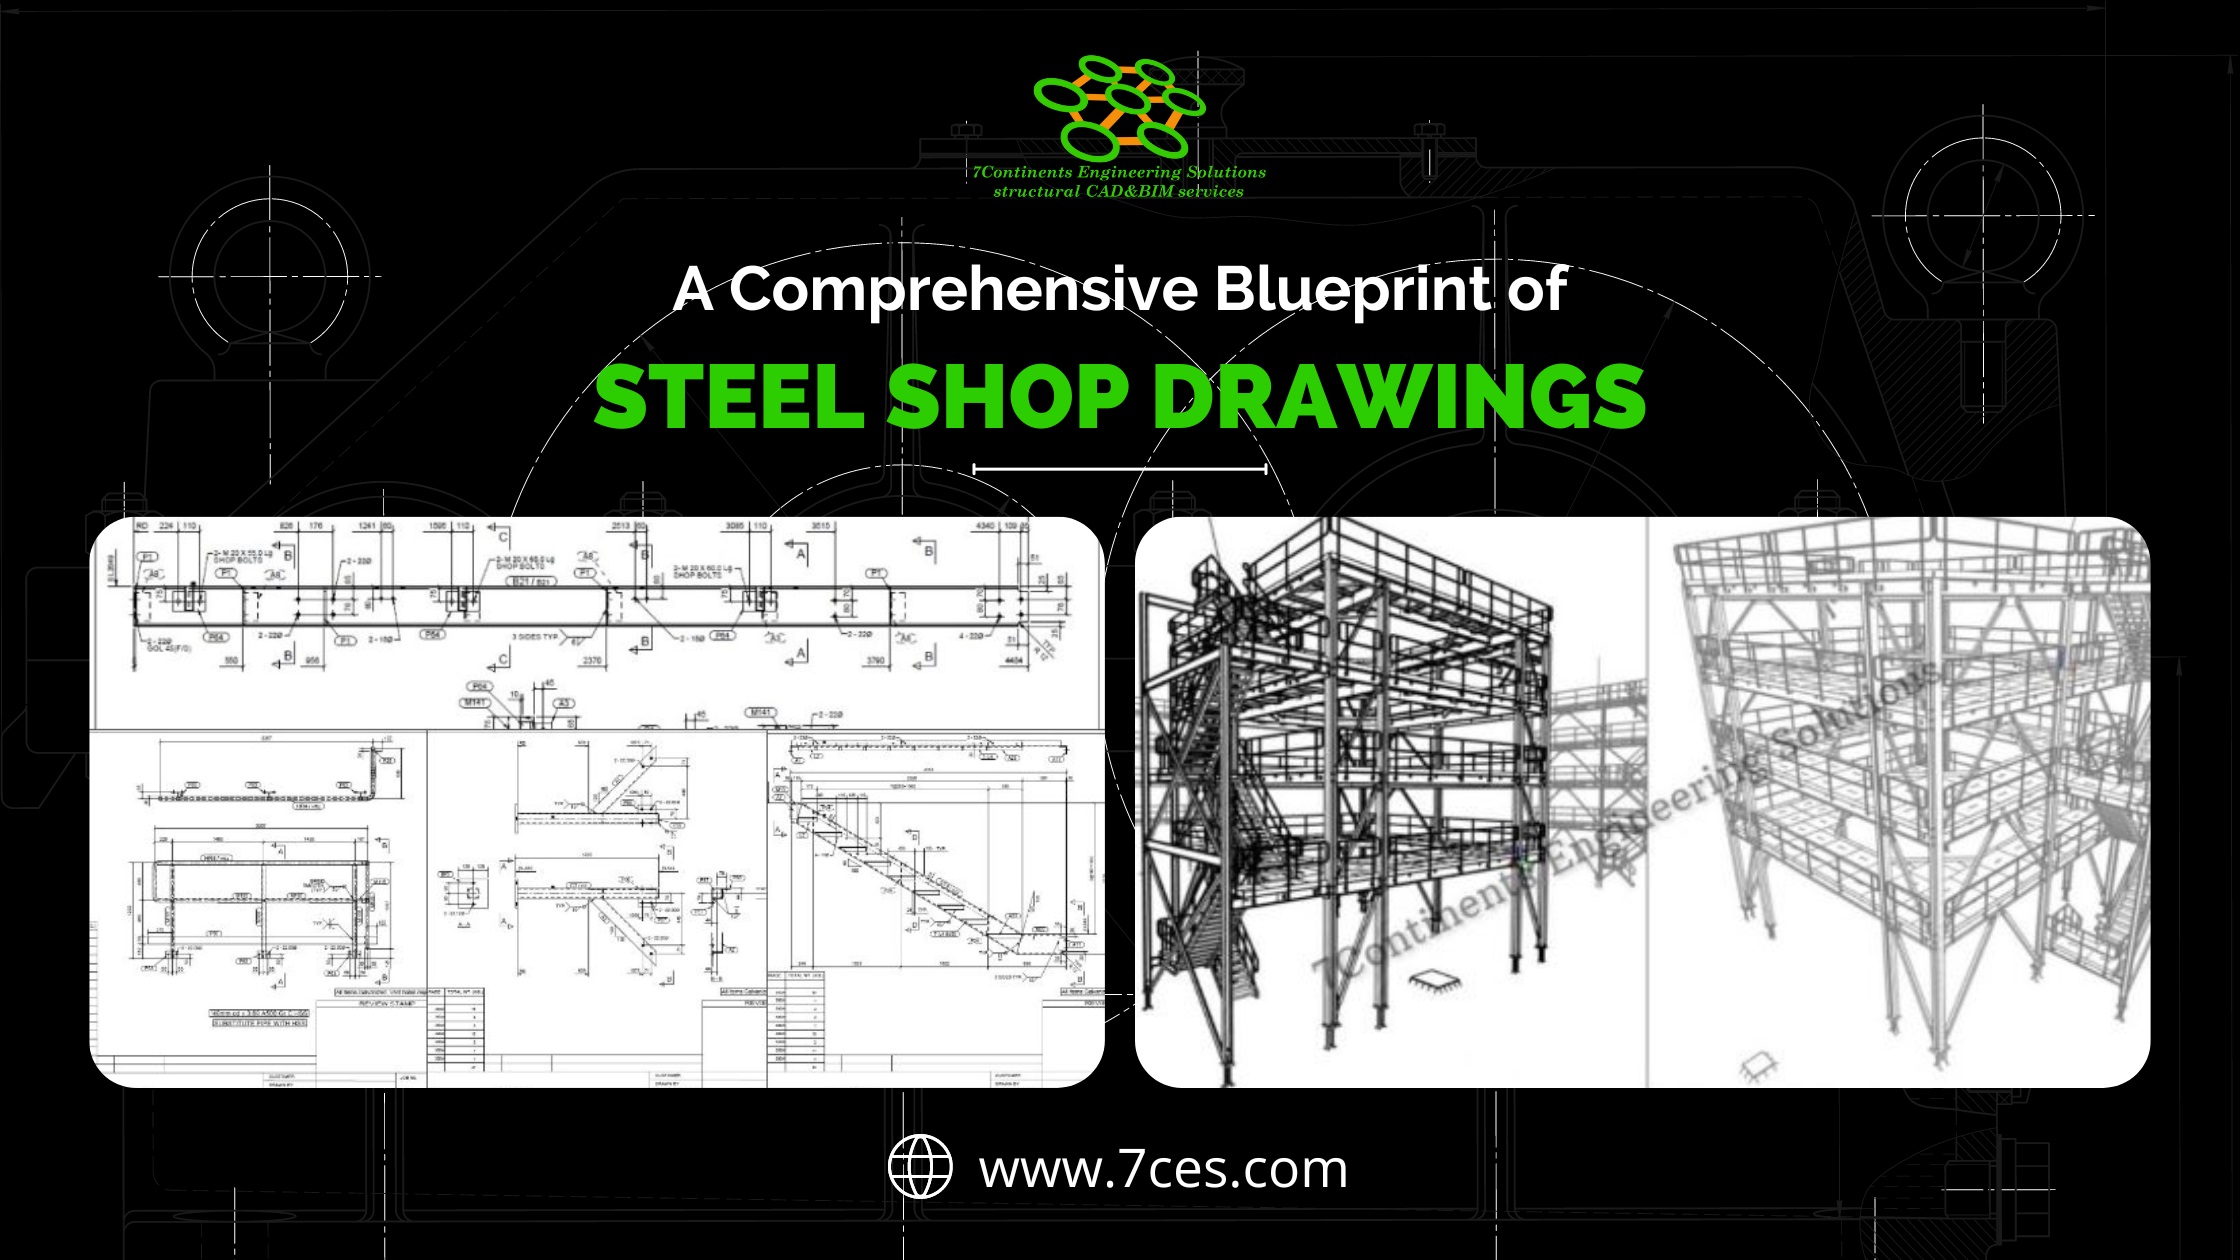 A Comprehensive Blueprint of Steel Shop Drawings